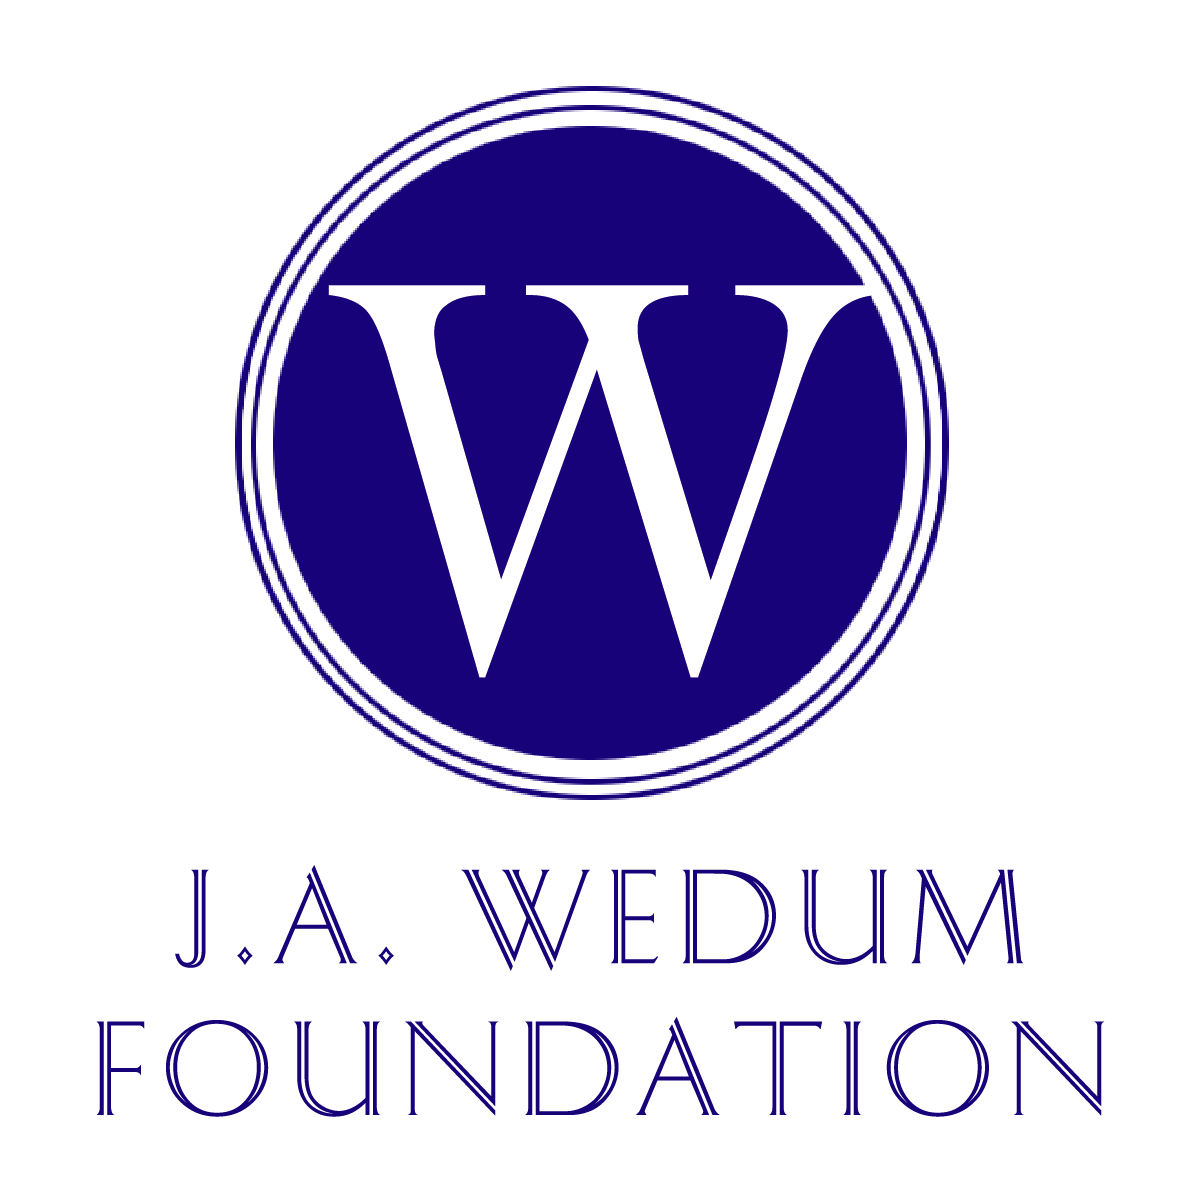 J. A. Wedum Foundation